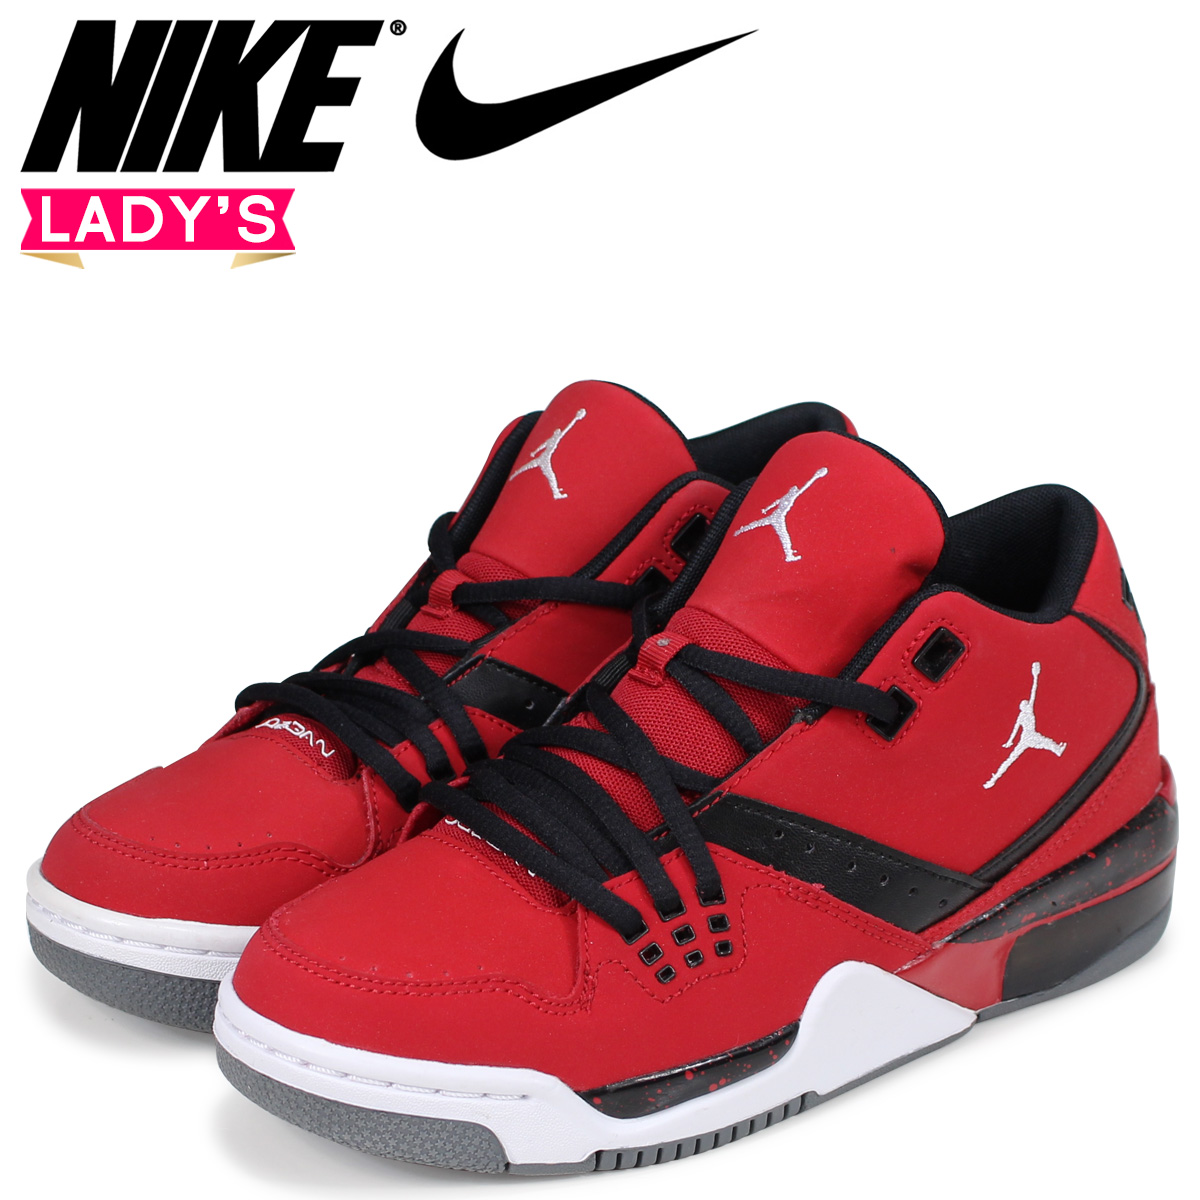 Sugar Online Shop: NIKE Nike Air Jordan flight Lady's sneakers AIR 